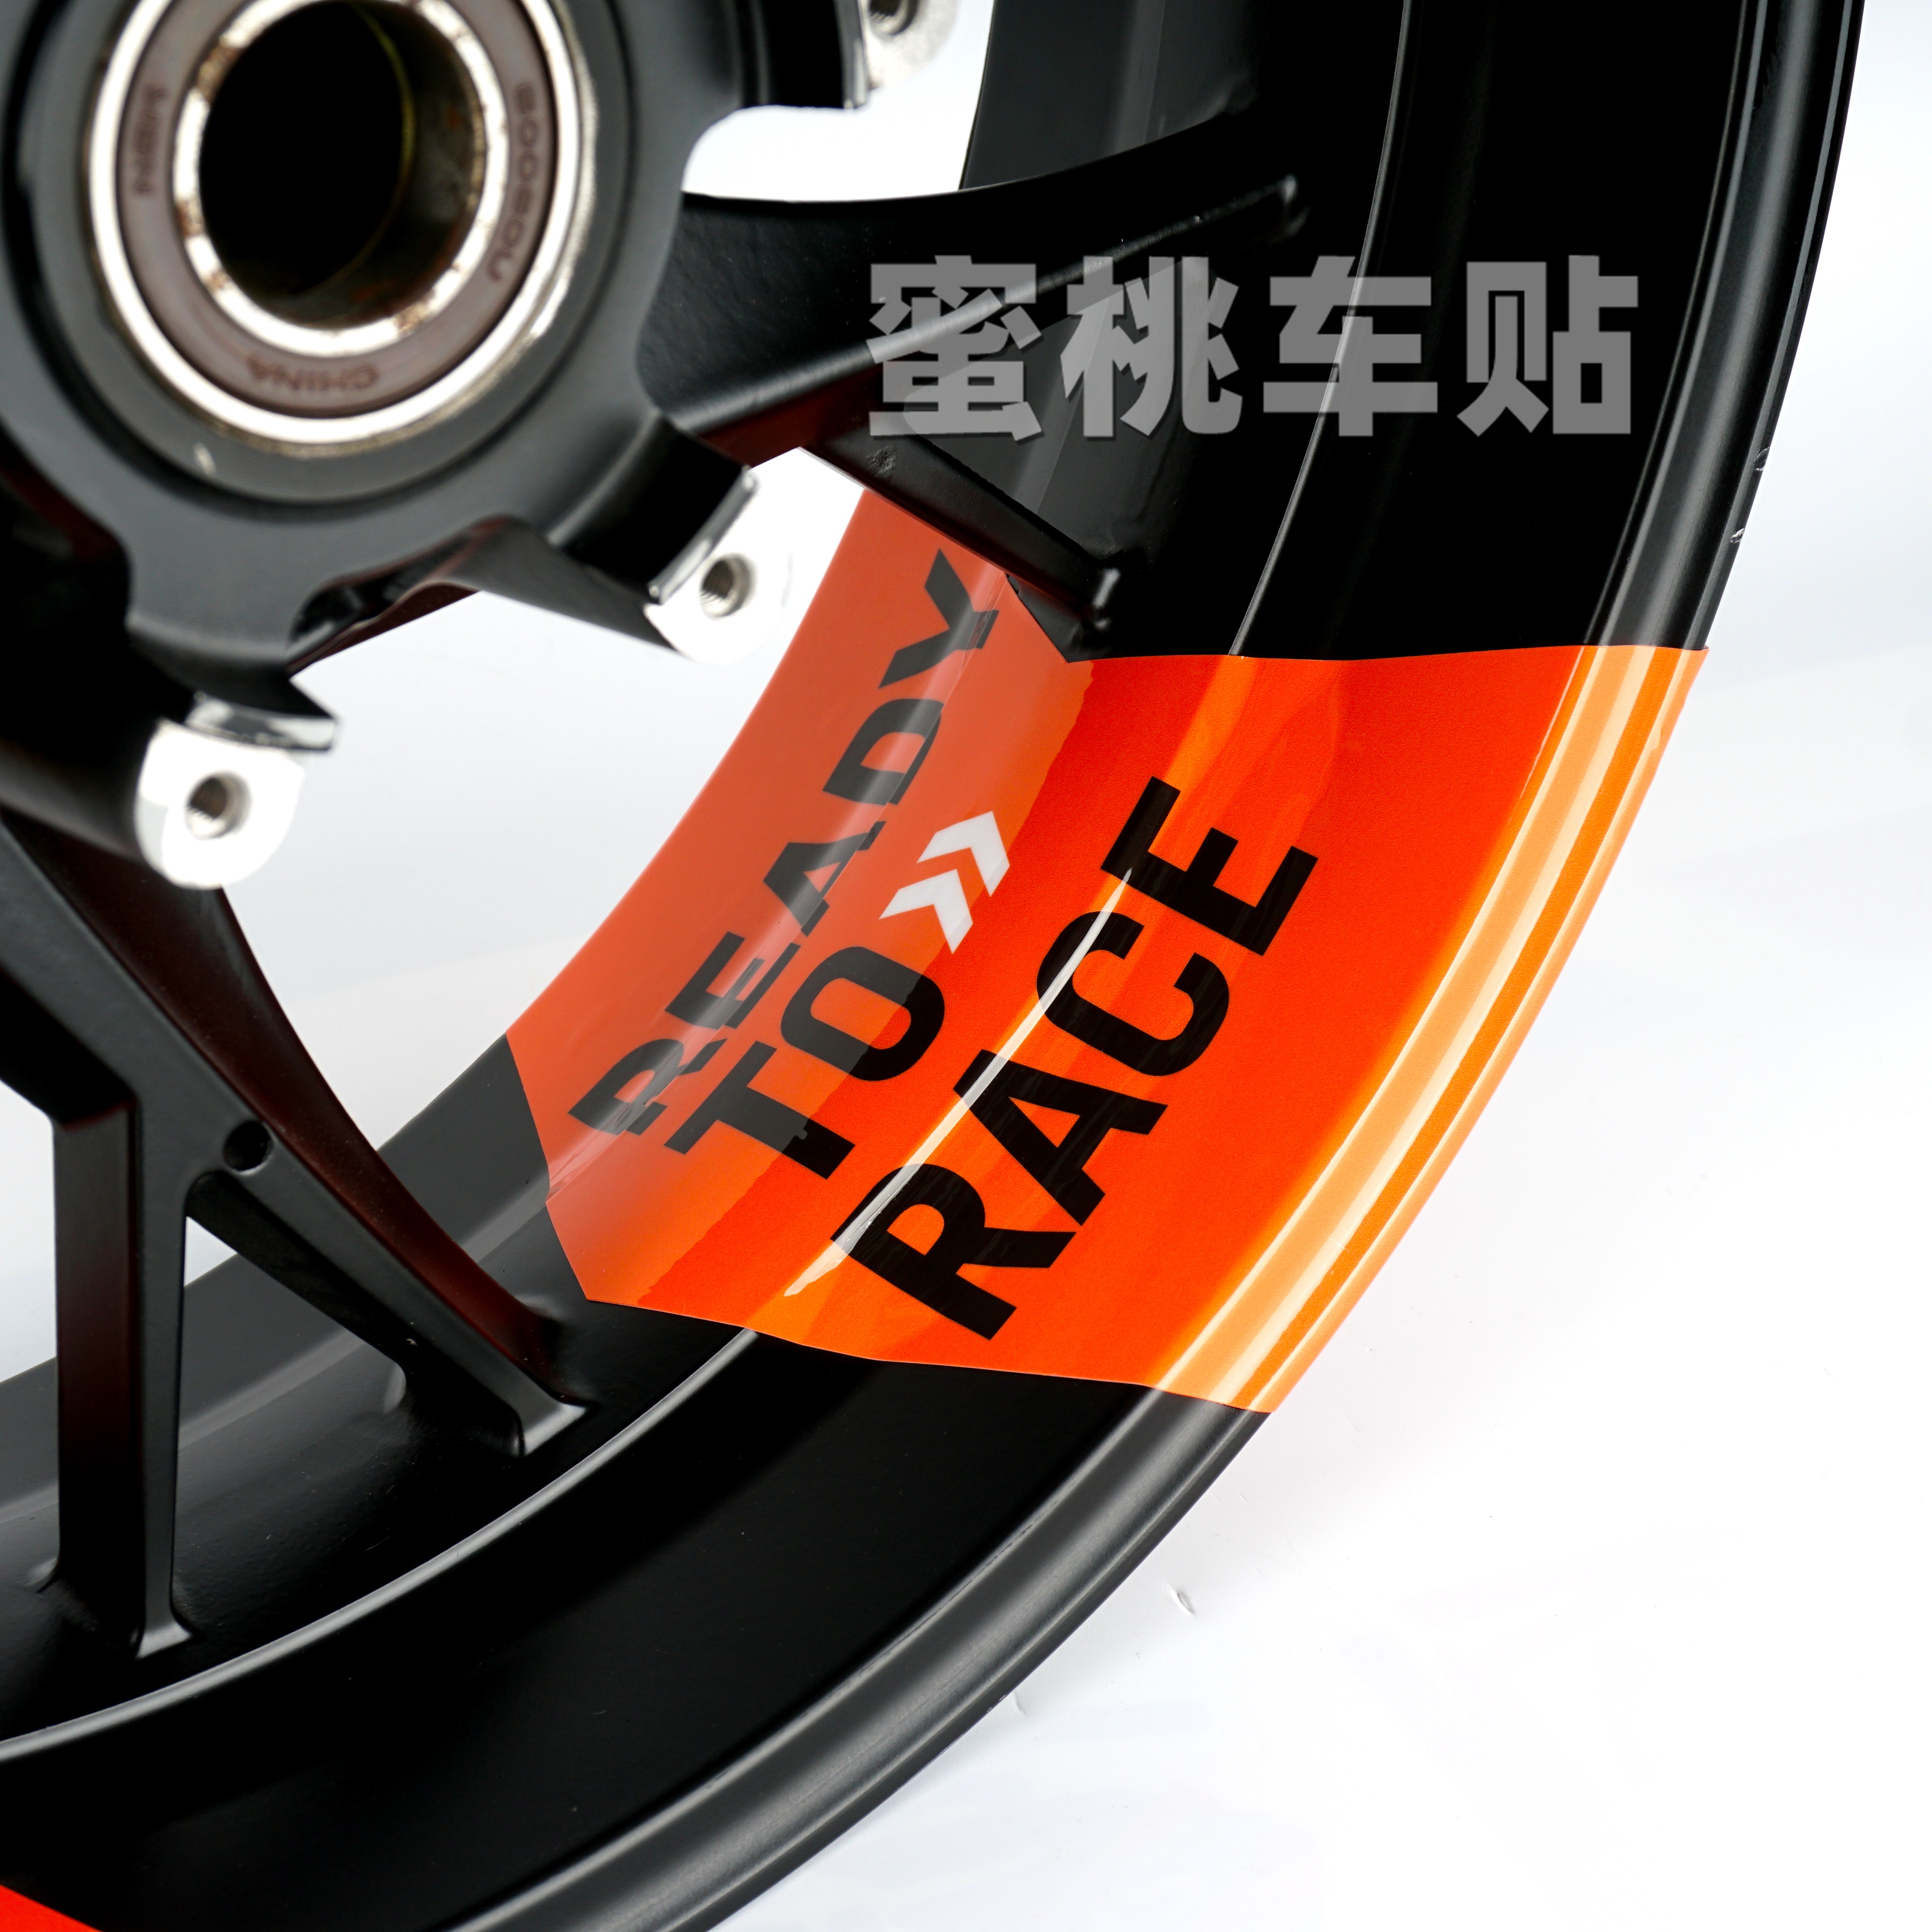 250SR 450SR 450NK 800NK改装 摩托车 钢圈 轮圈 轮毂 大箭头贴纸